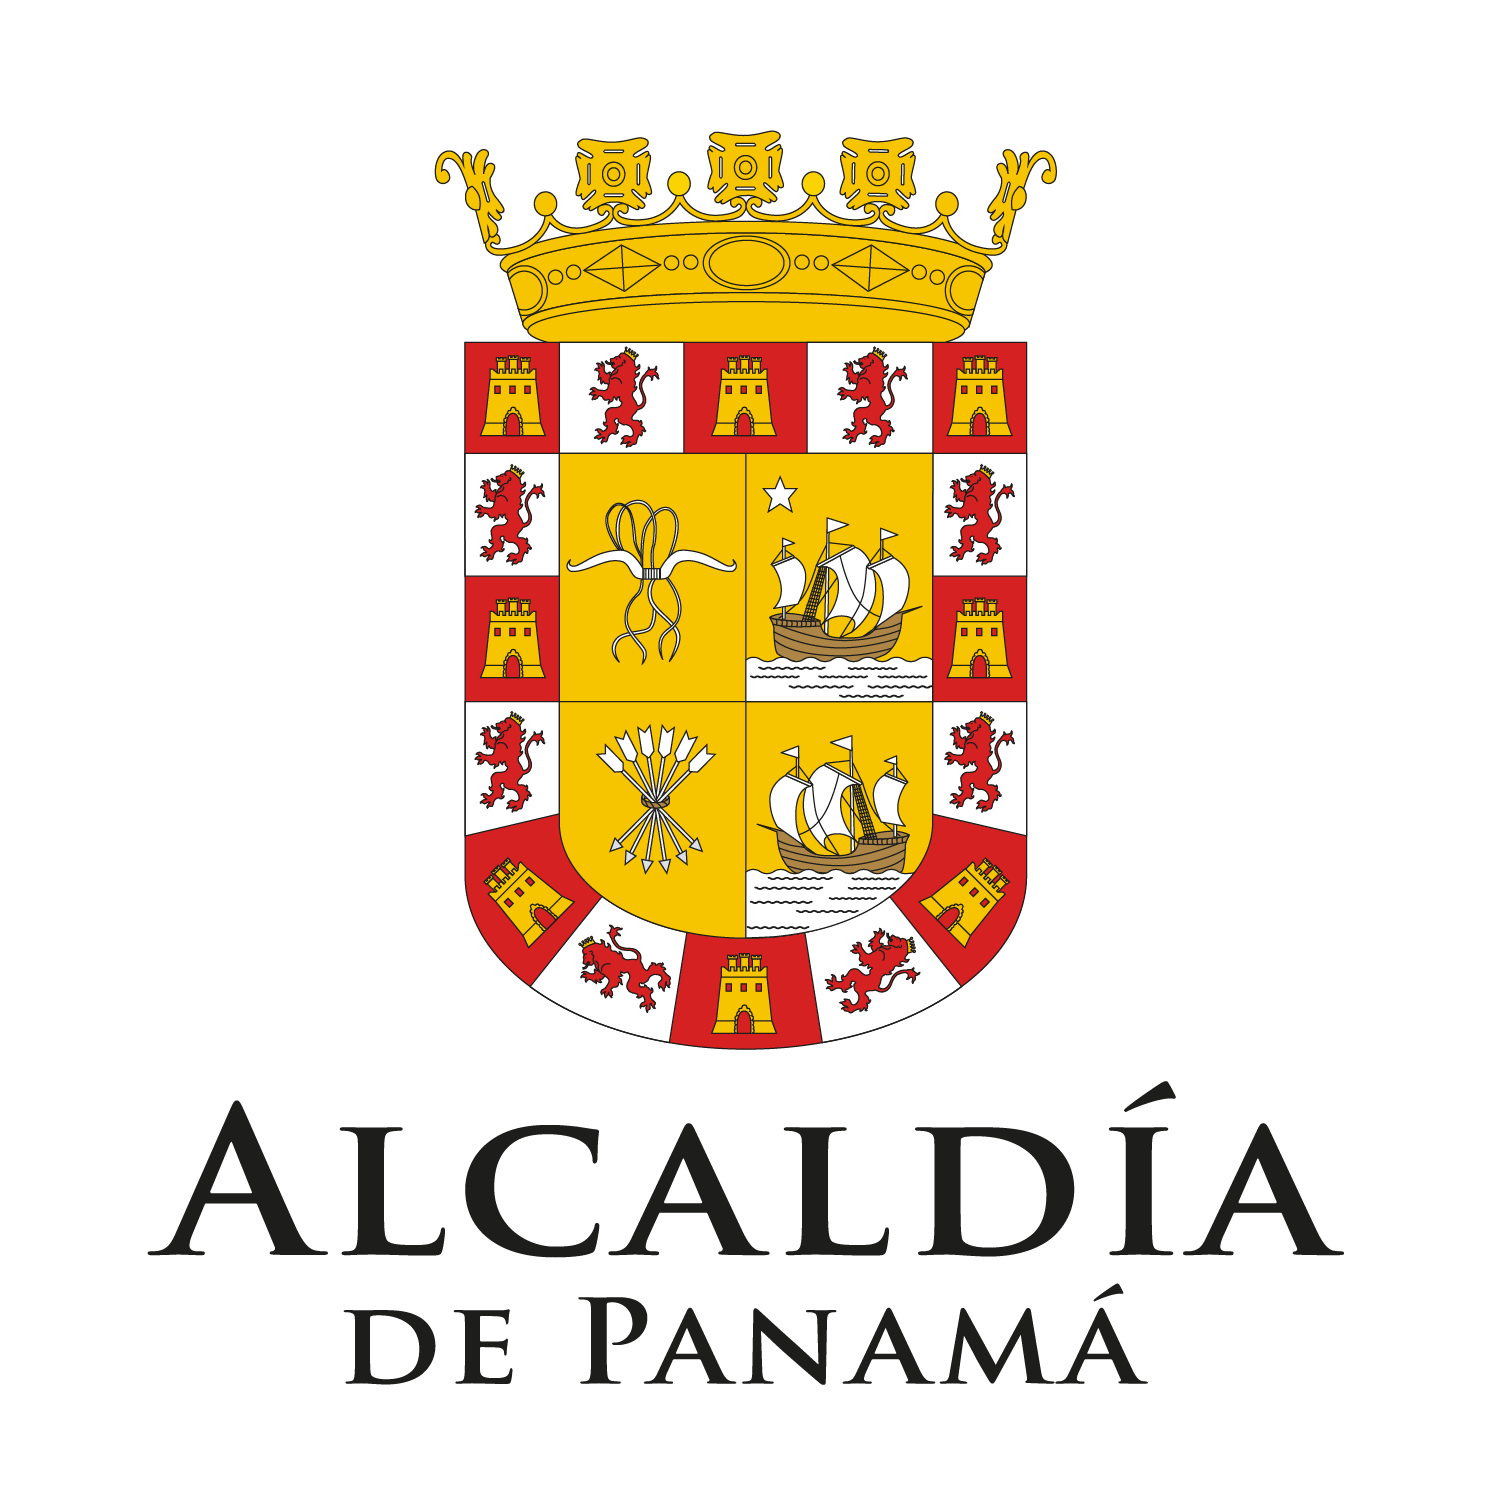 Alcaldía de Panamá